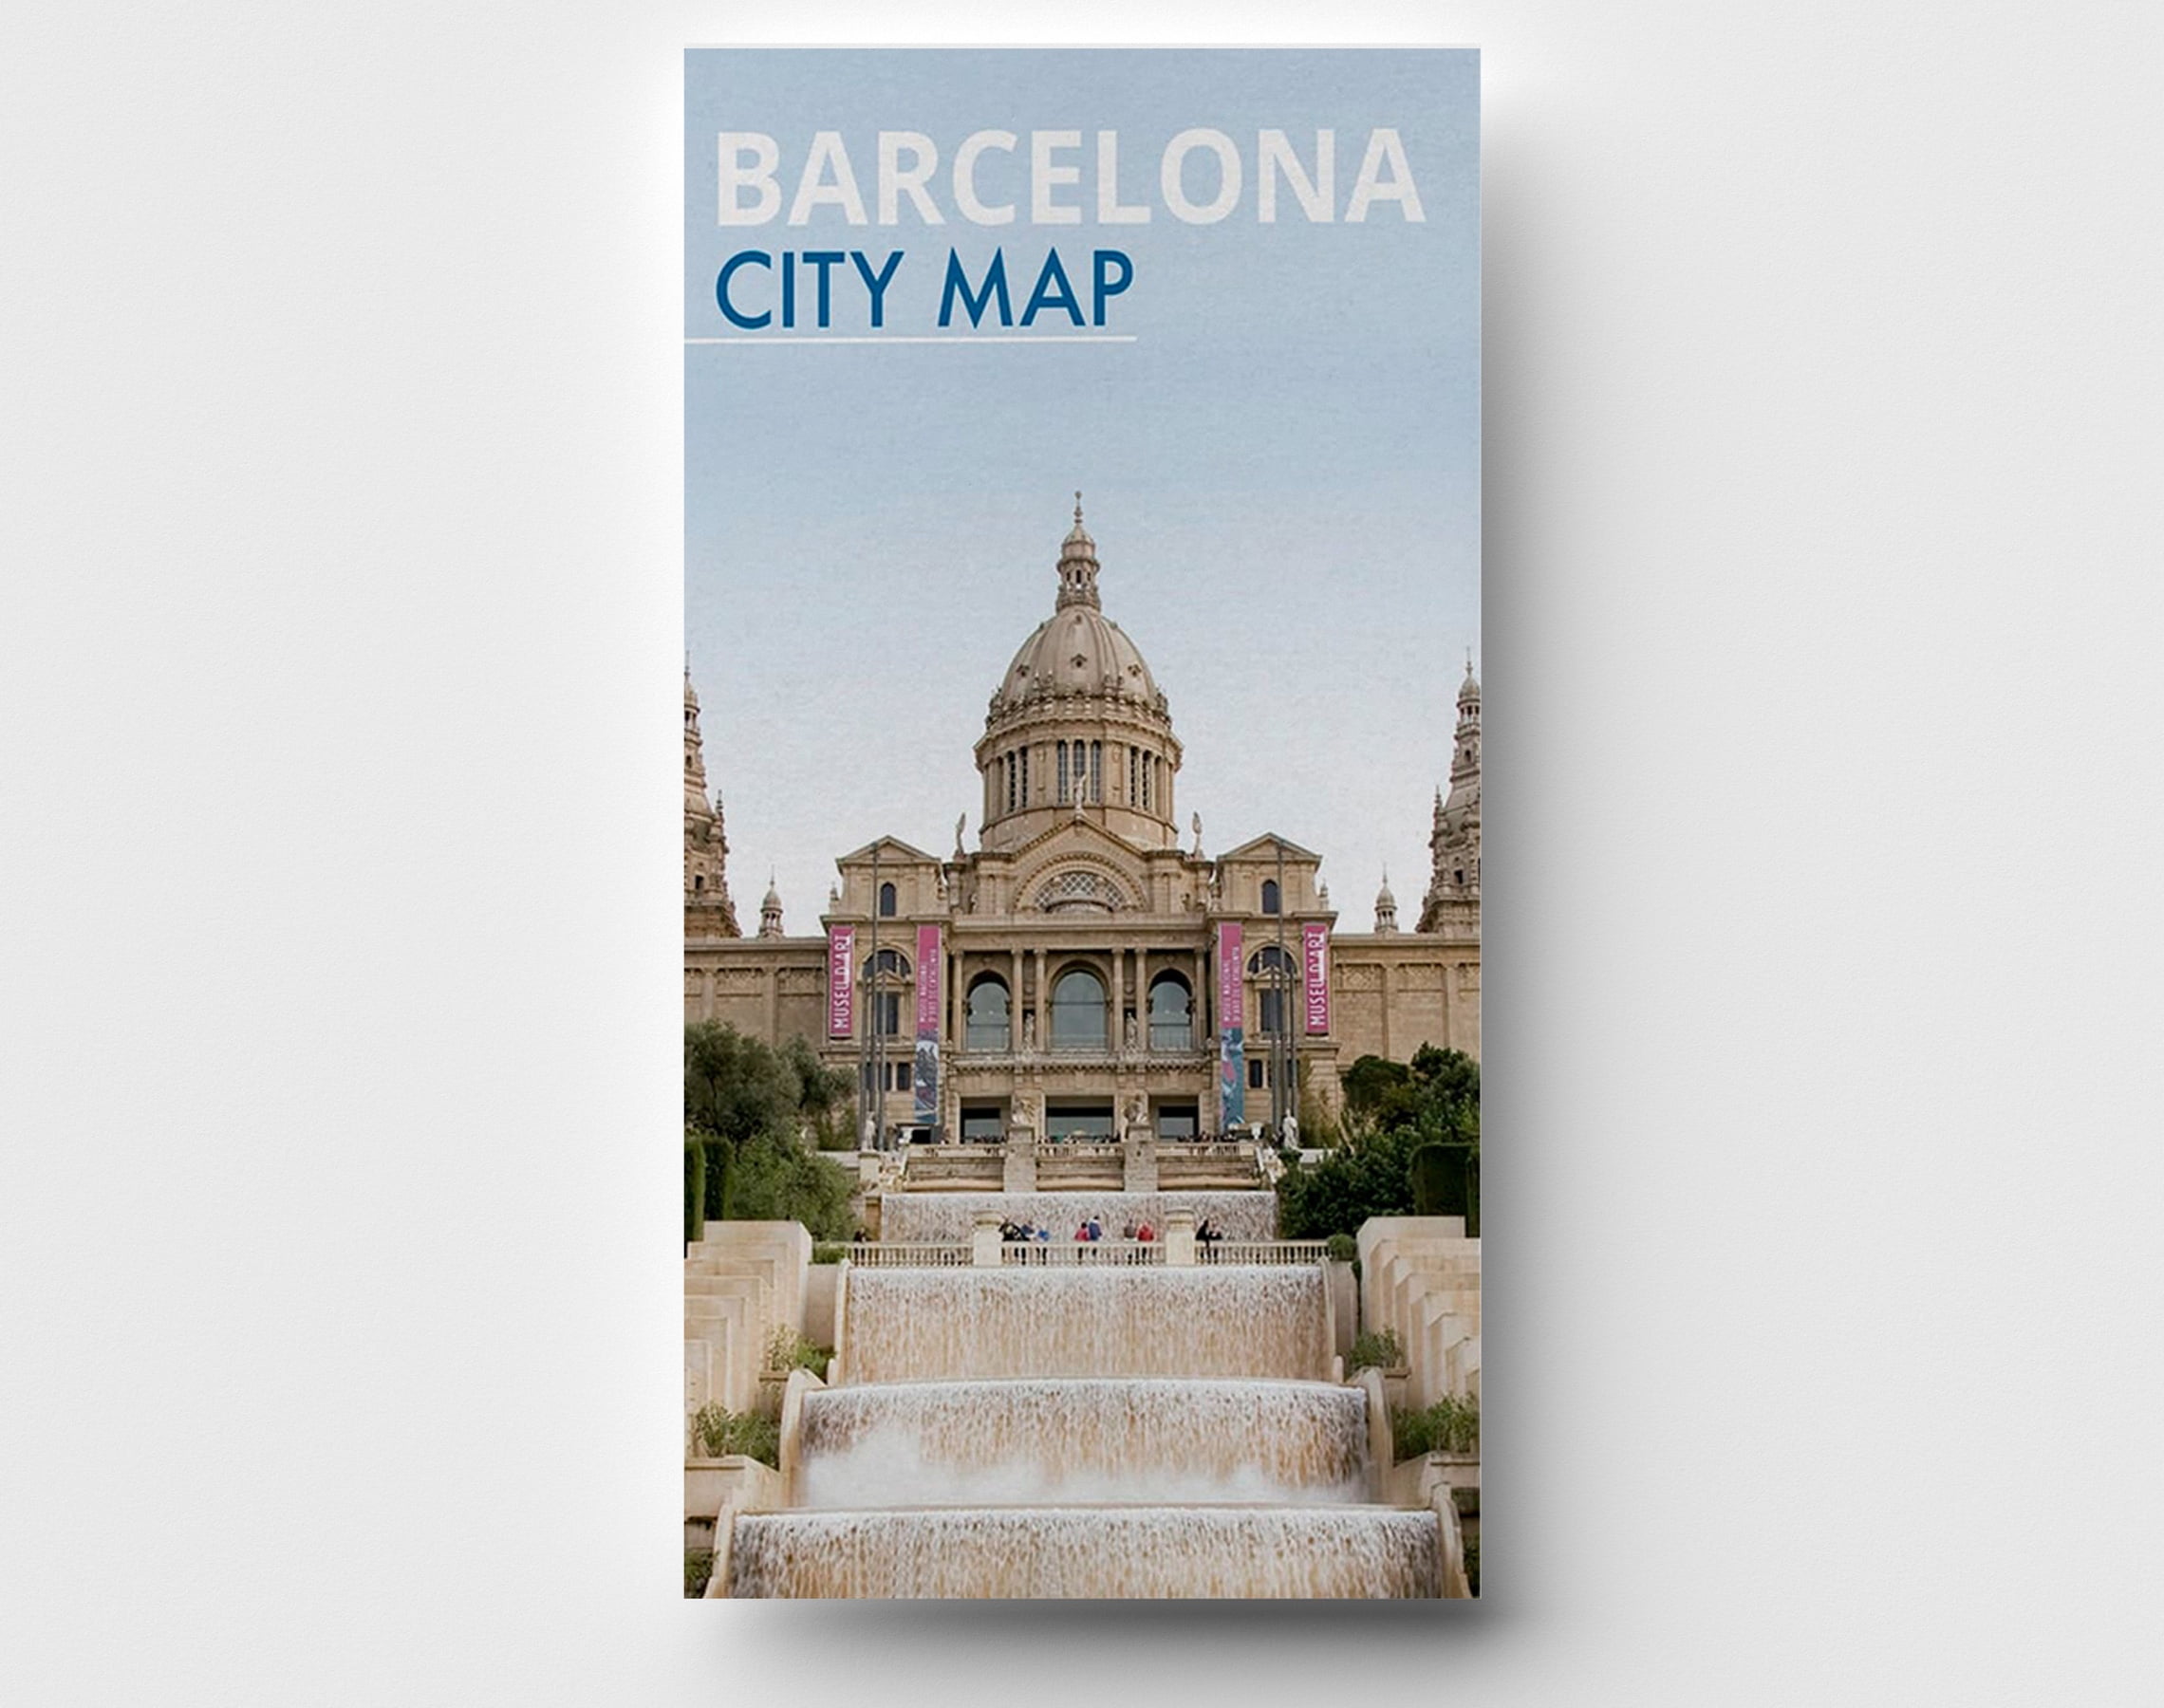 Barcelona City Map 1